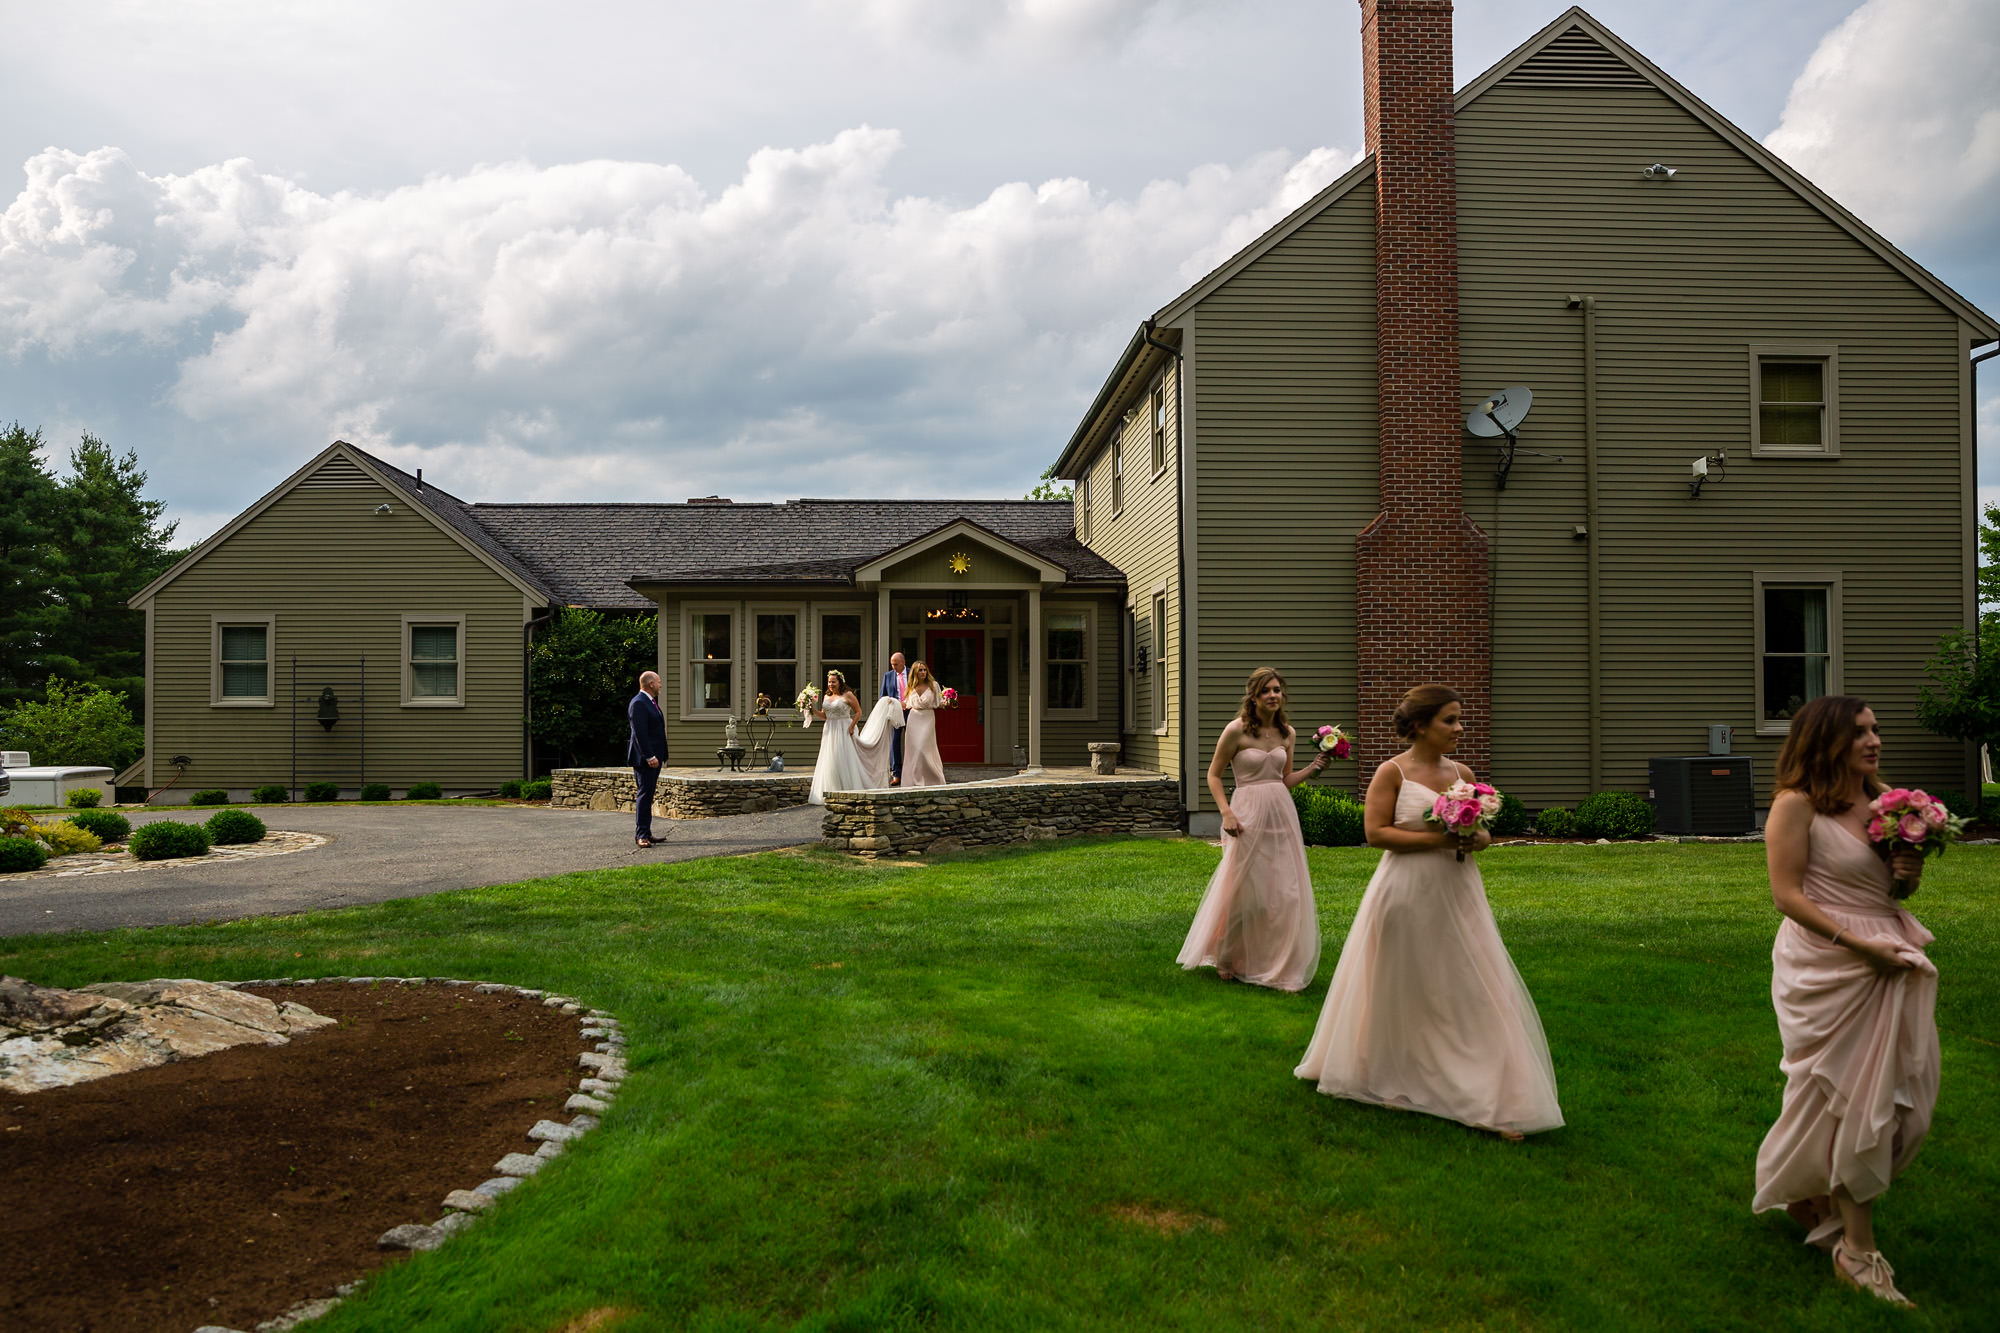 A beautiful wedding ceremony in Sugar Hill, New Hampshire